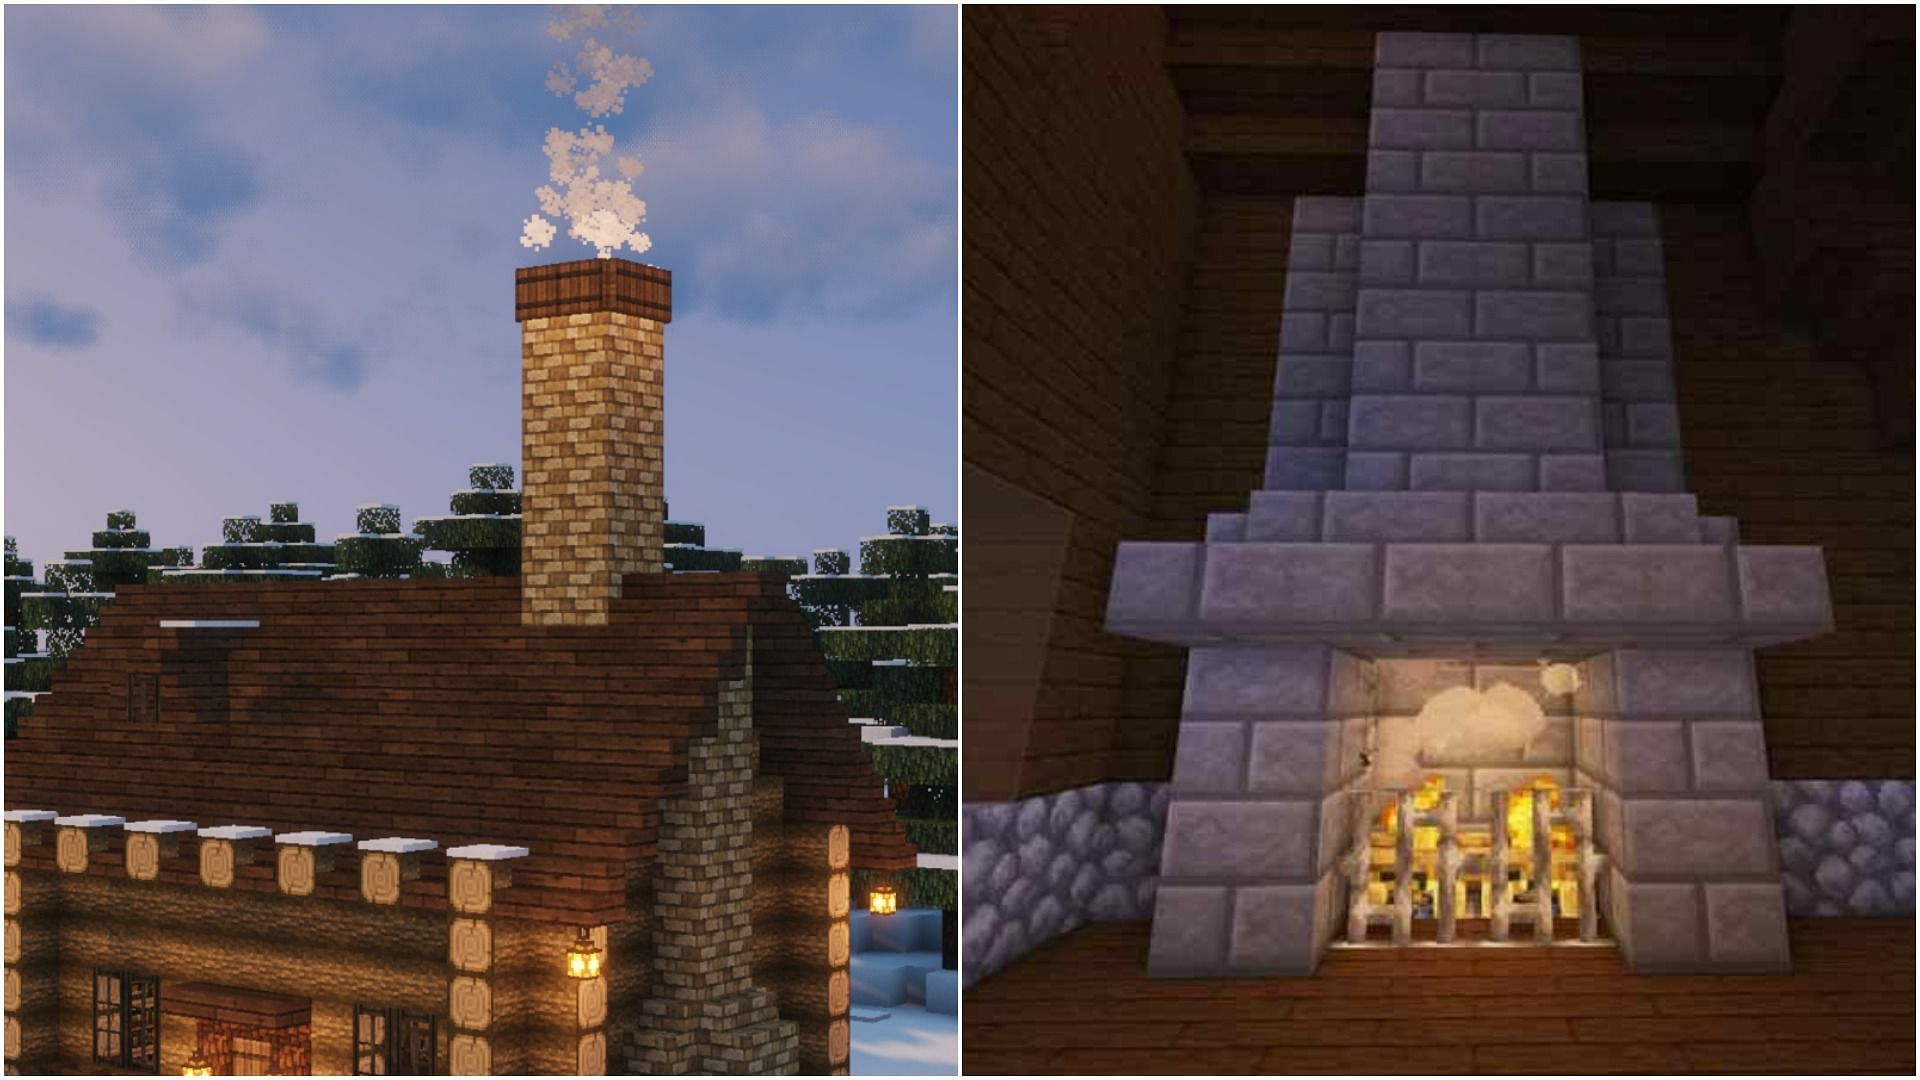 Chimney and fireplace (Image via Kelpie The Fox, YouTube)